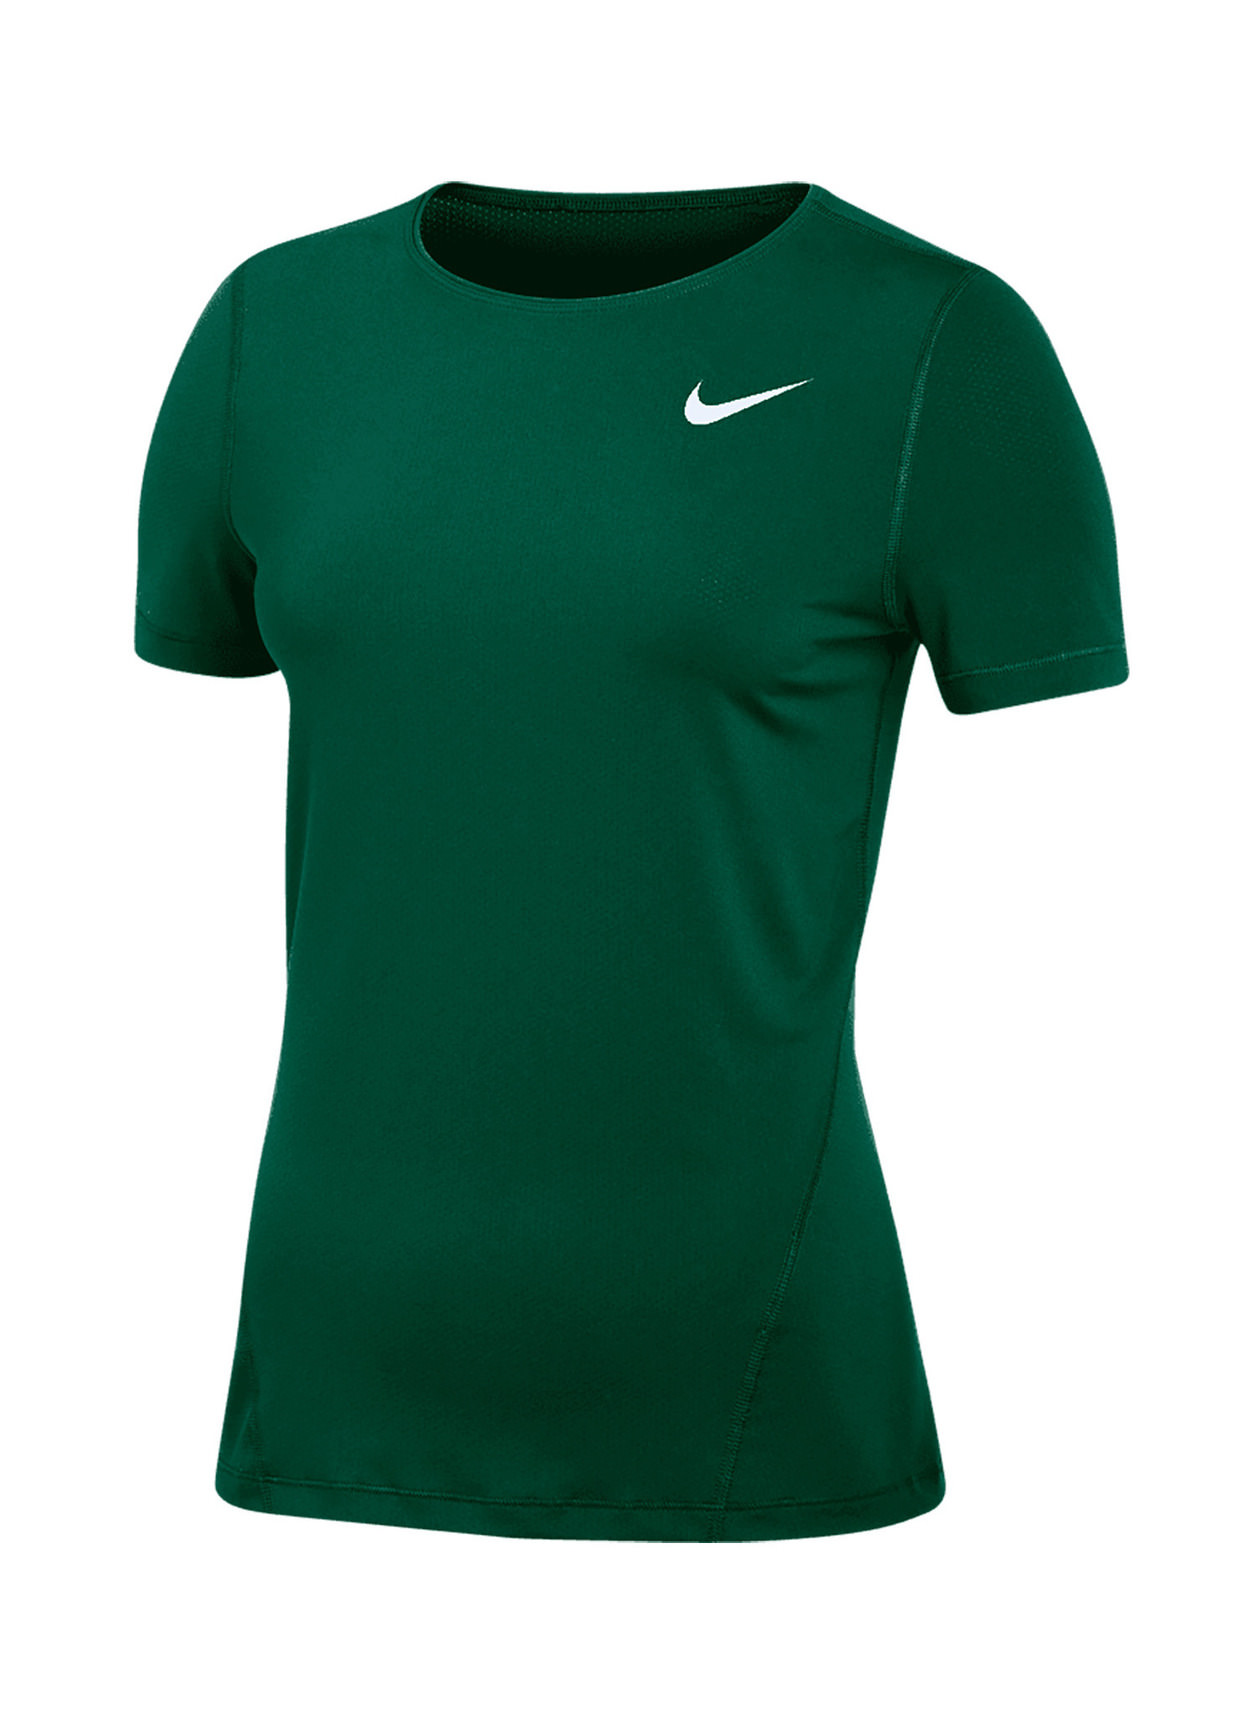 Nike Women's Gorge Green / White Dri-FIT T-Shirt